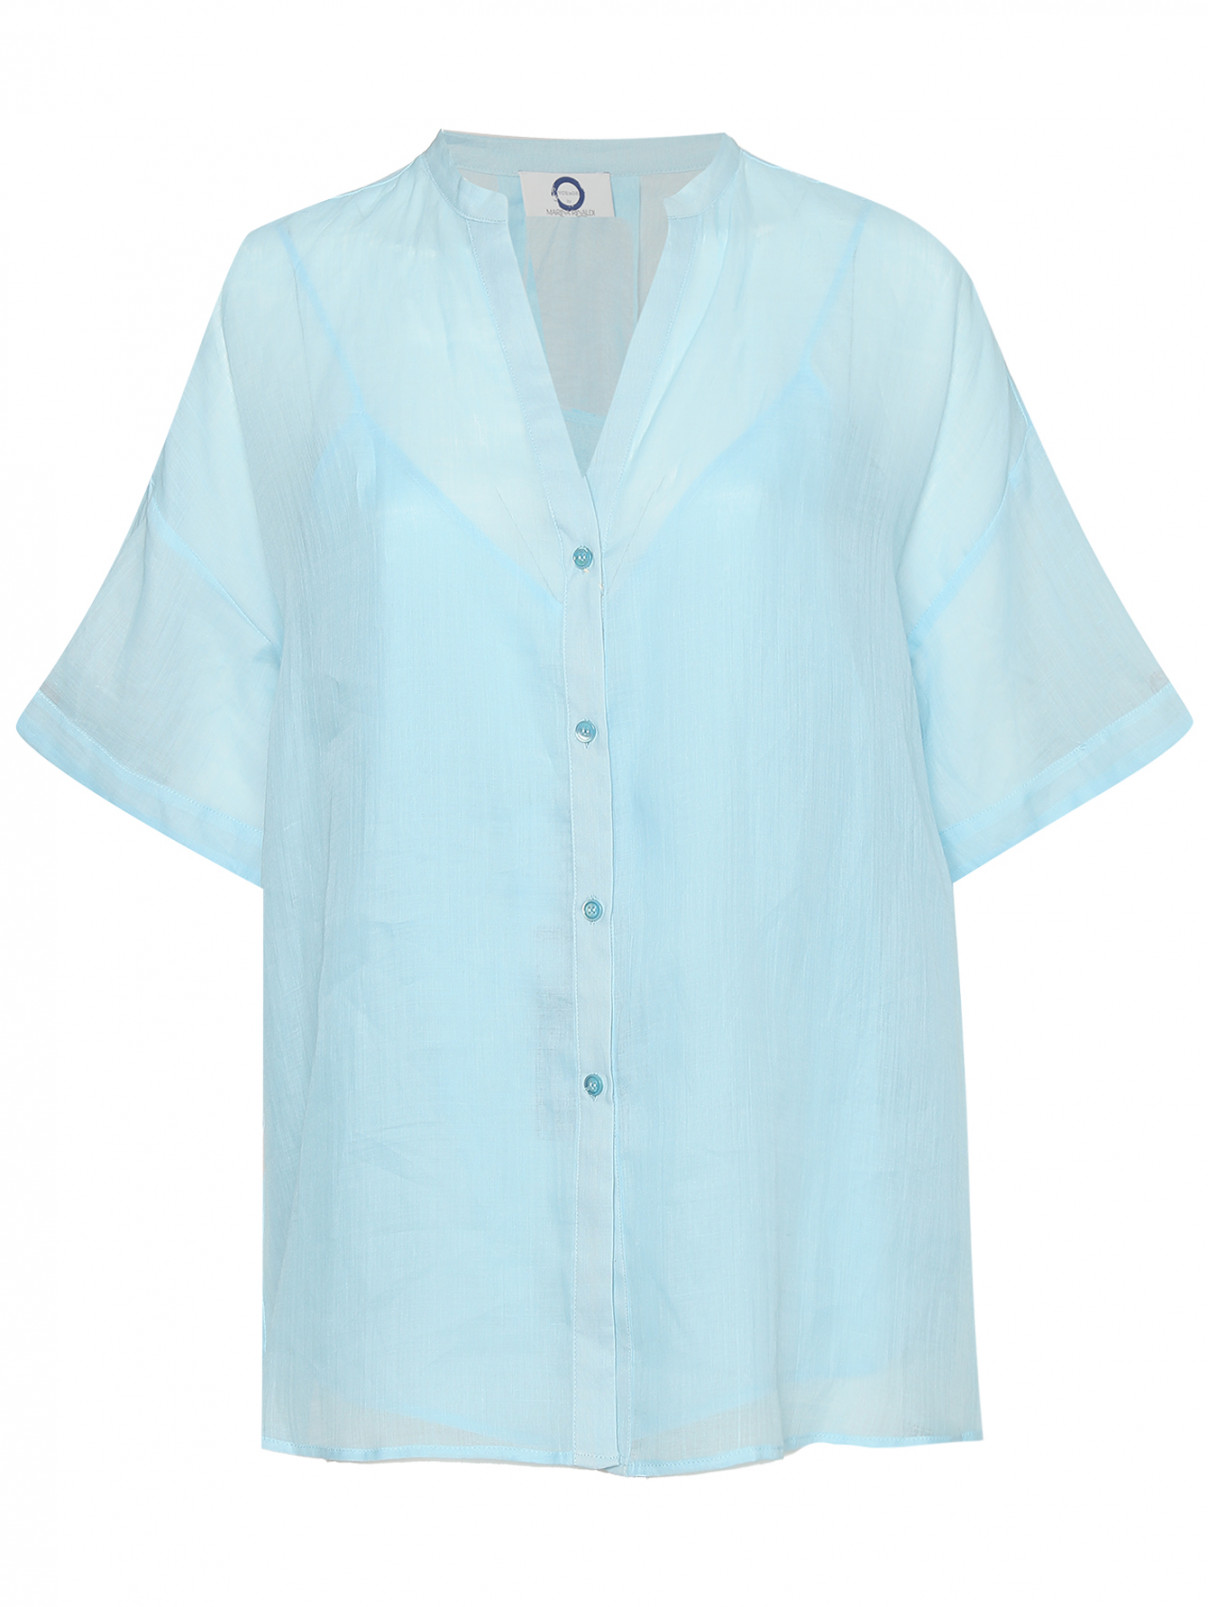 Блуза свободного кроя с короткими рукавами Marina Rinaldi  –  Общий вид  – Цвет:  Синий